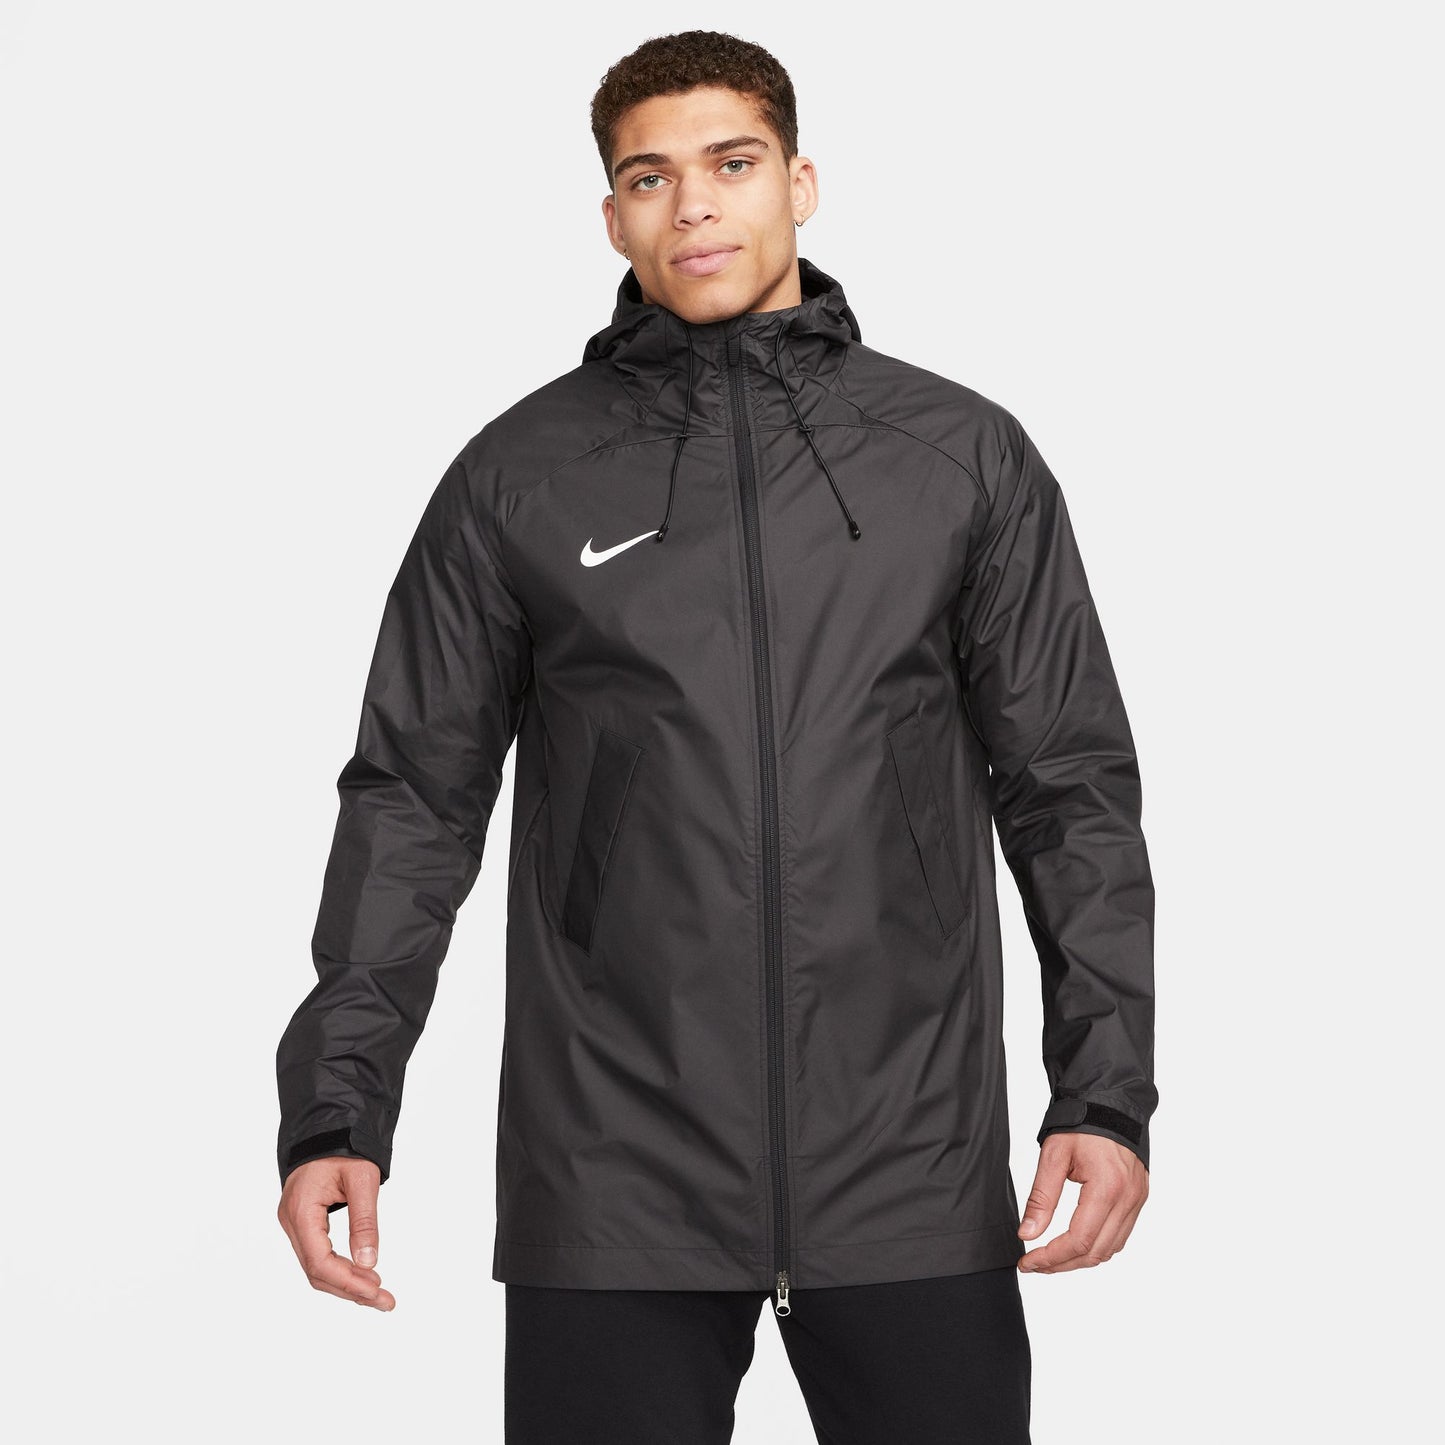 RSK Nike Storm-FIT Academy Pro Rain Jacket